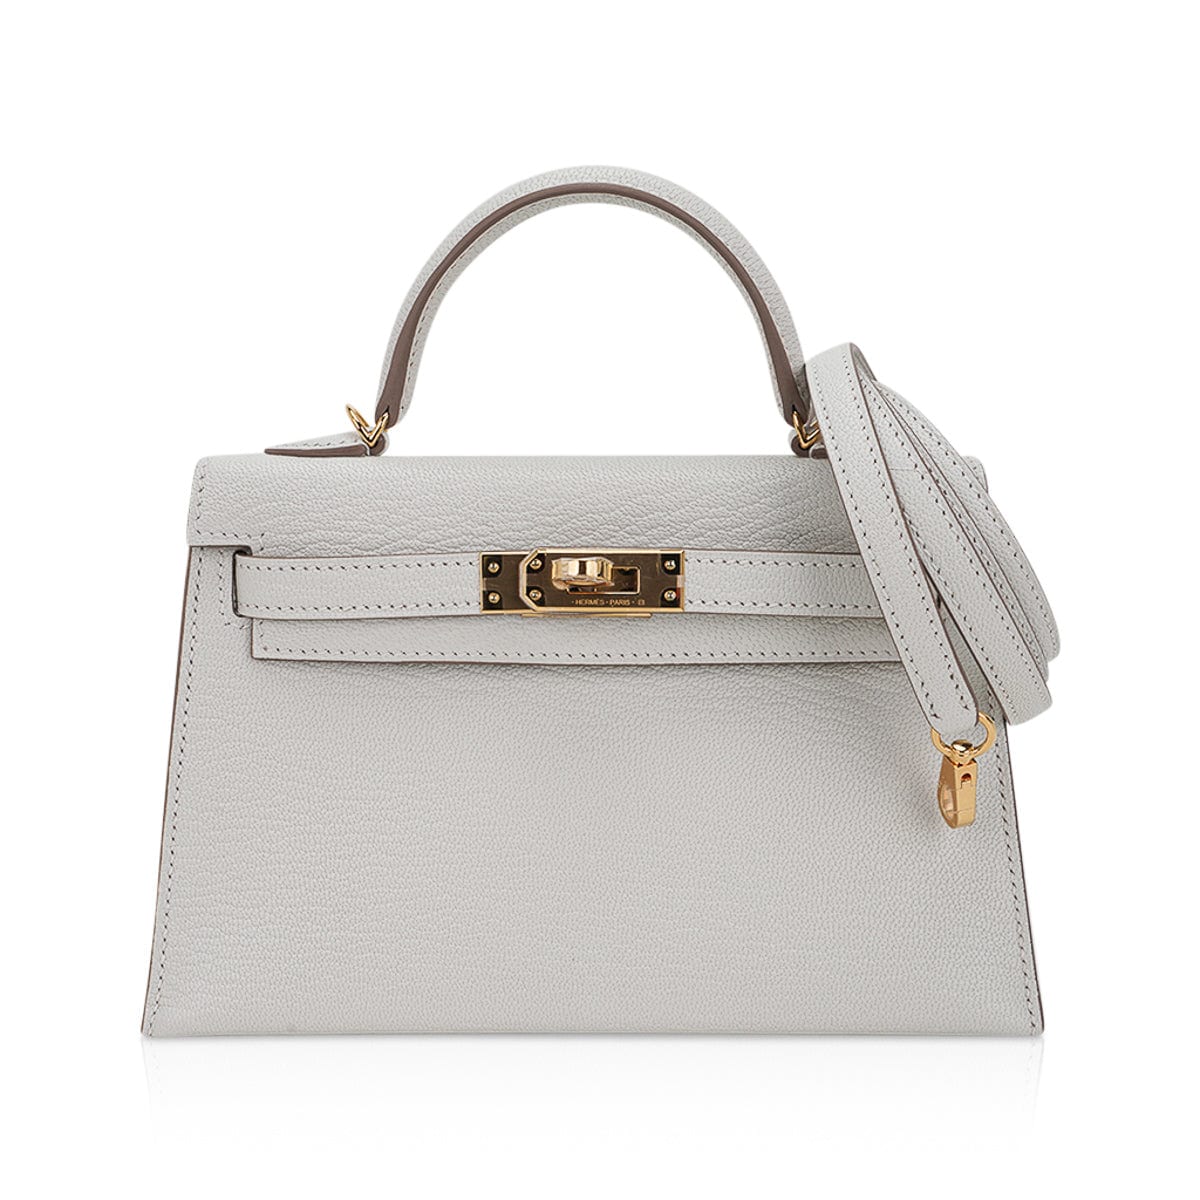 Hermes Kelly grey bag  Luxury bags collection, Bags, Grey bag